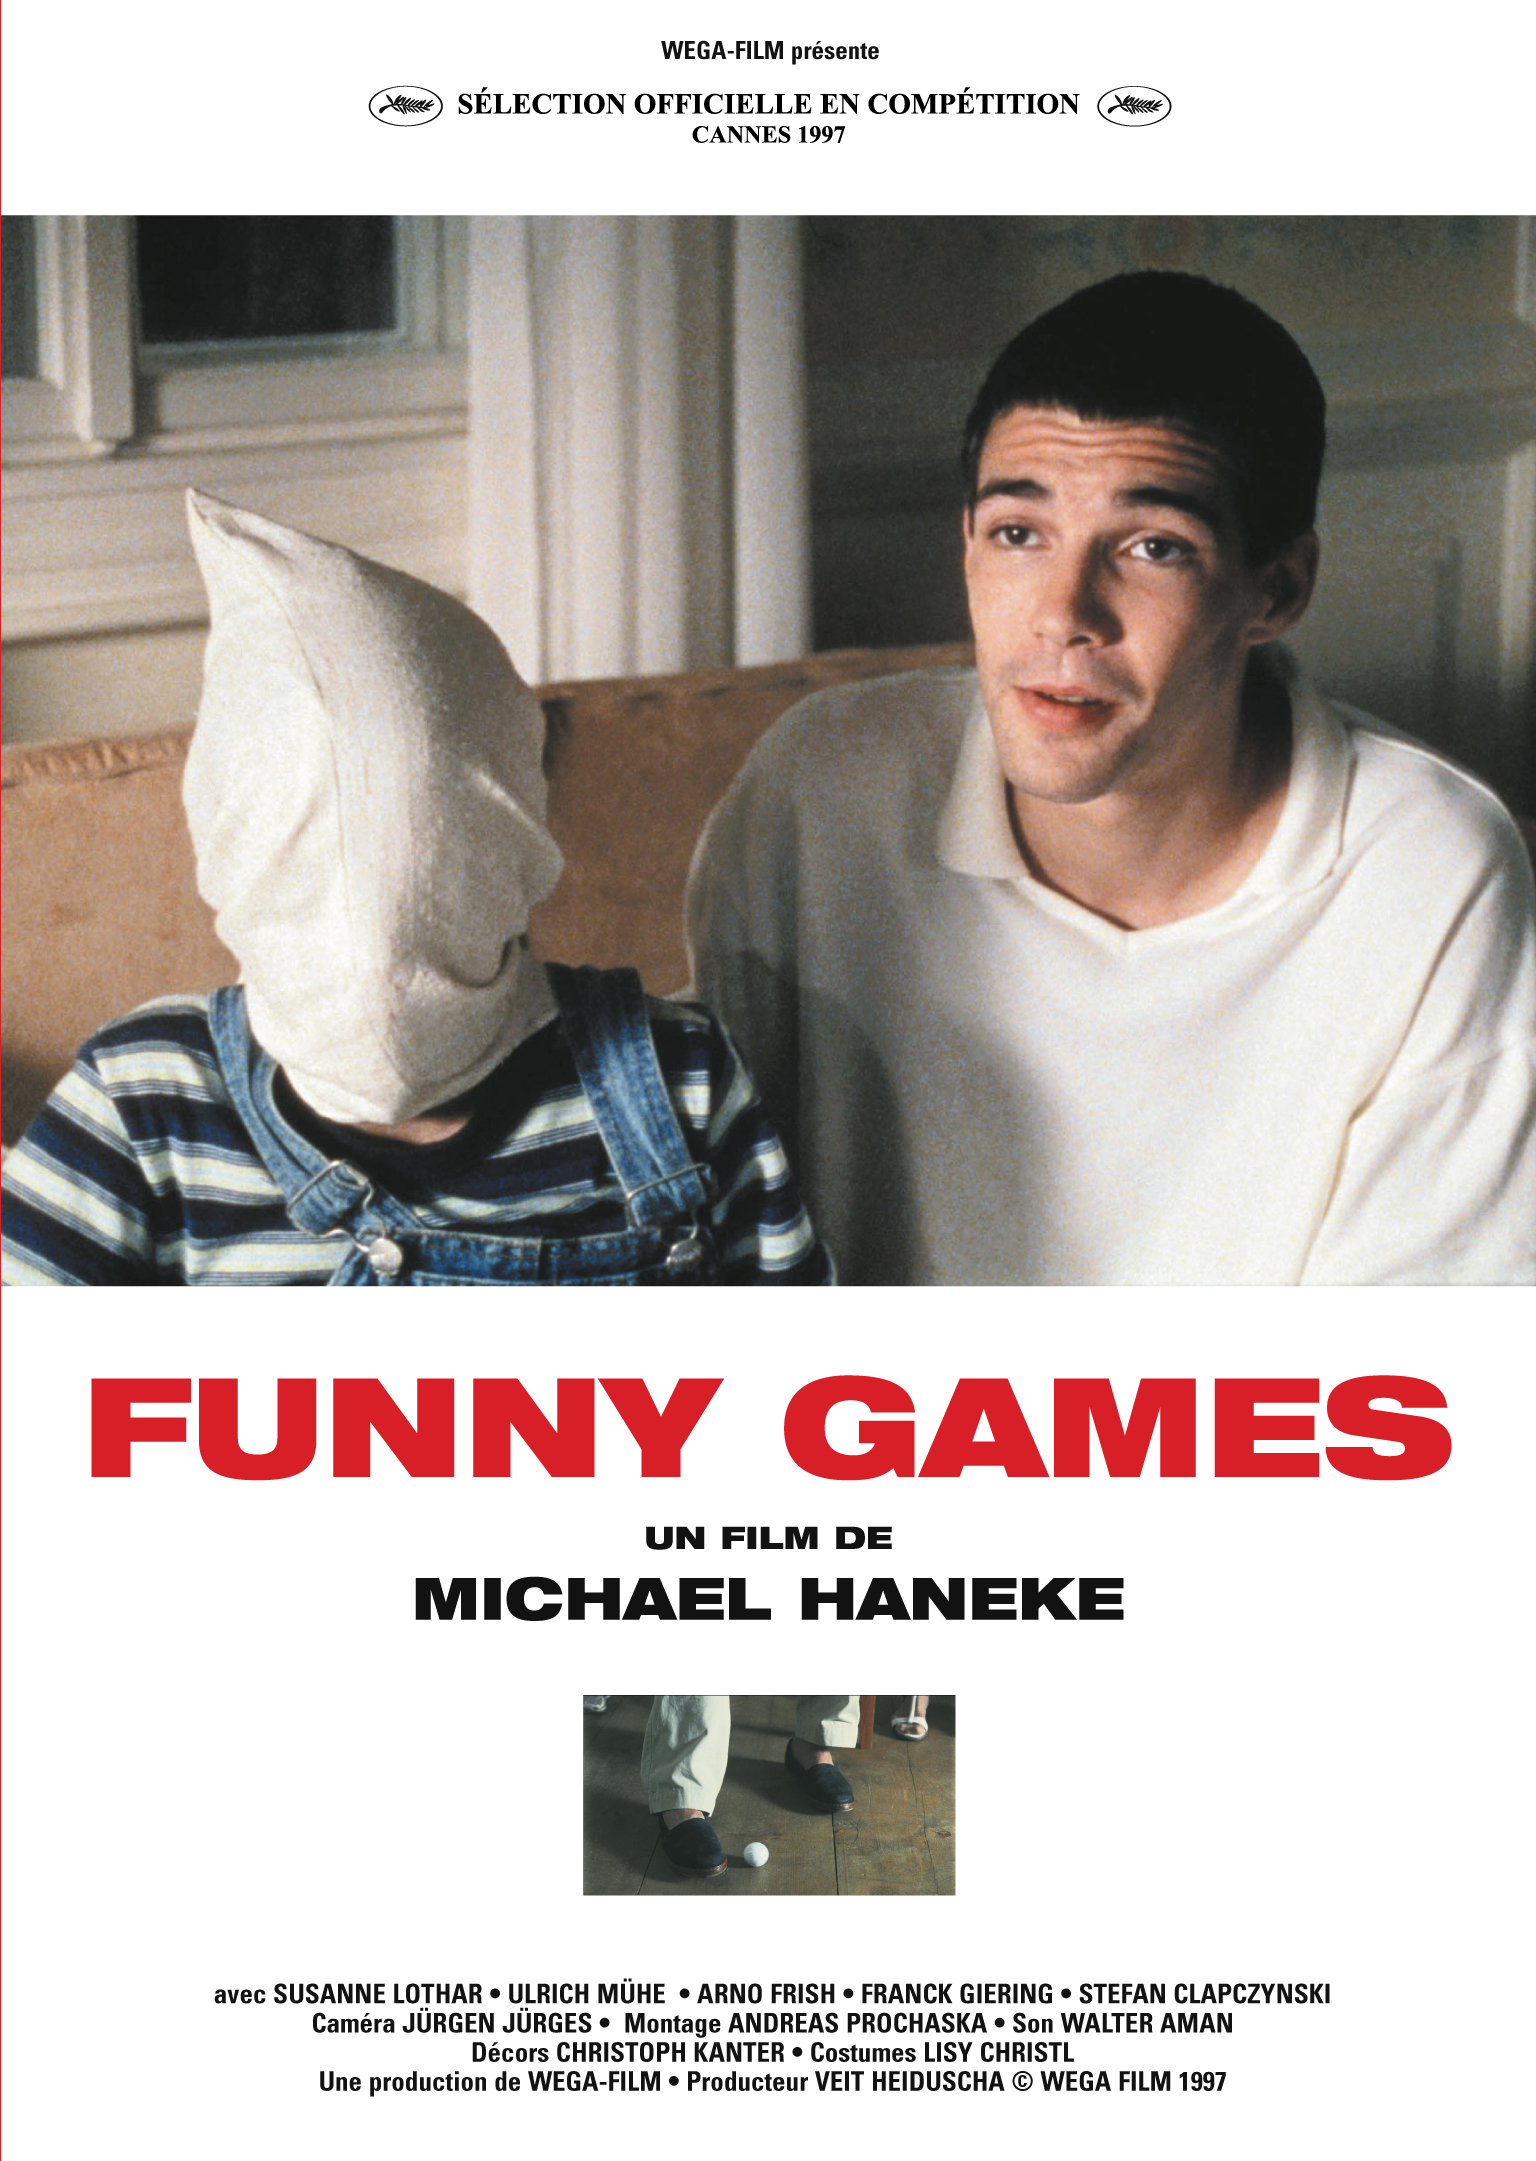 Funny Games (1997 film) - Wikipedia